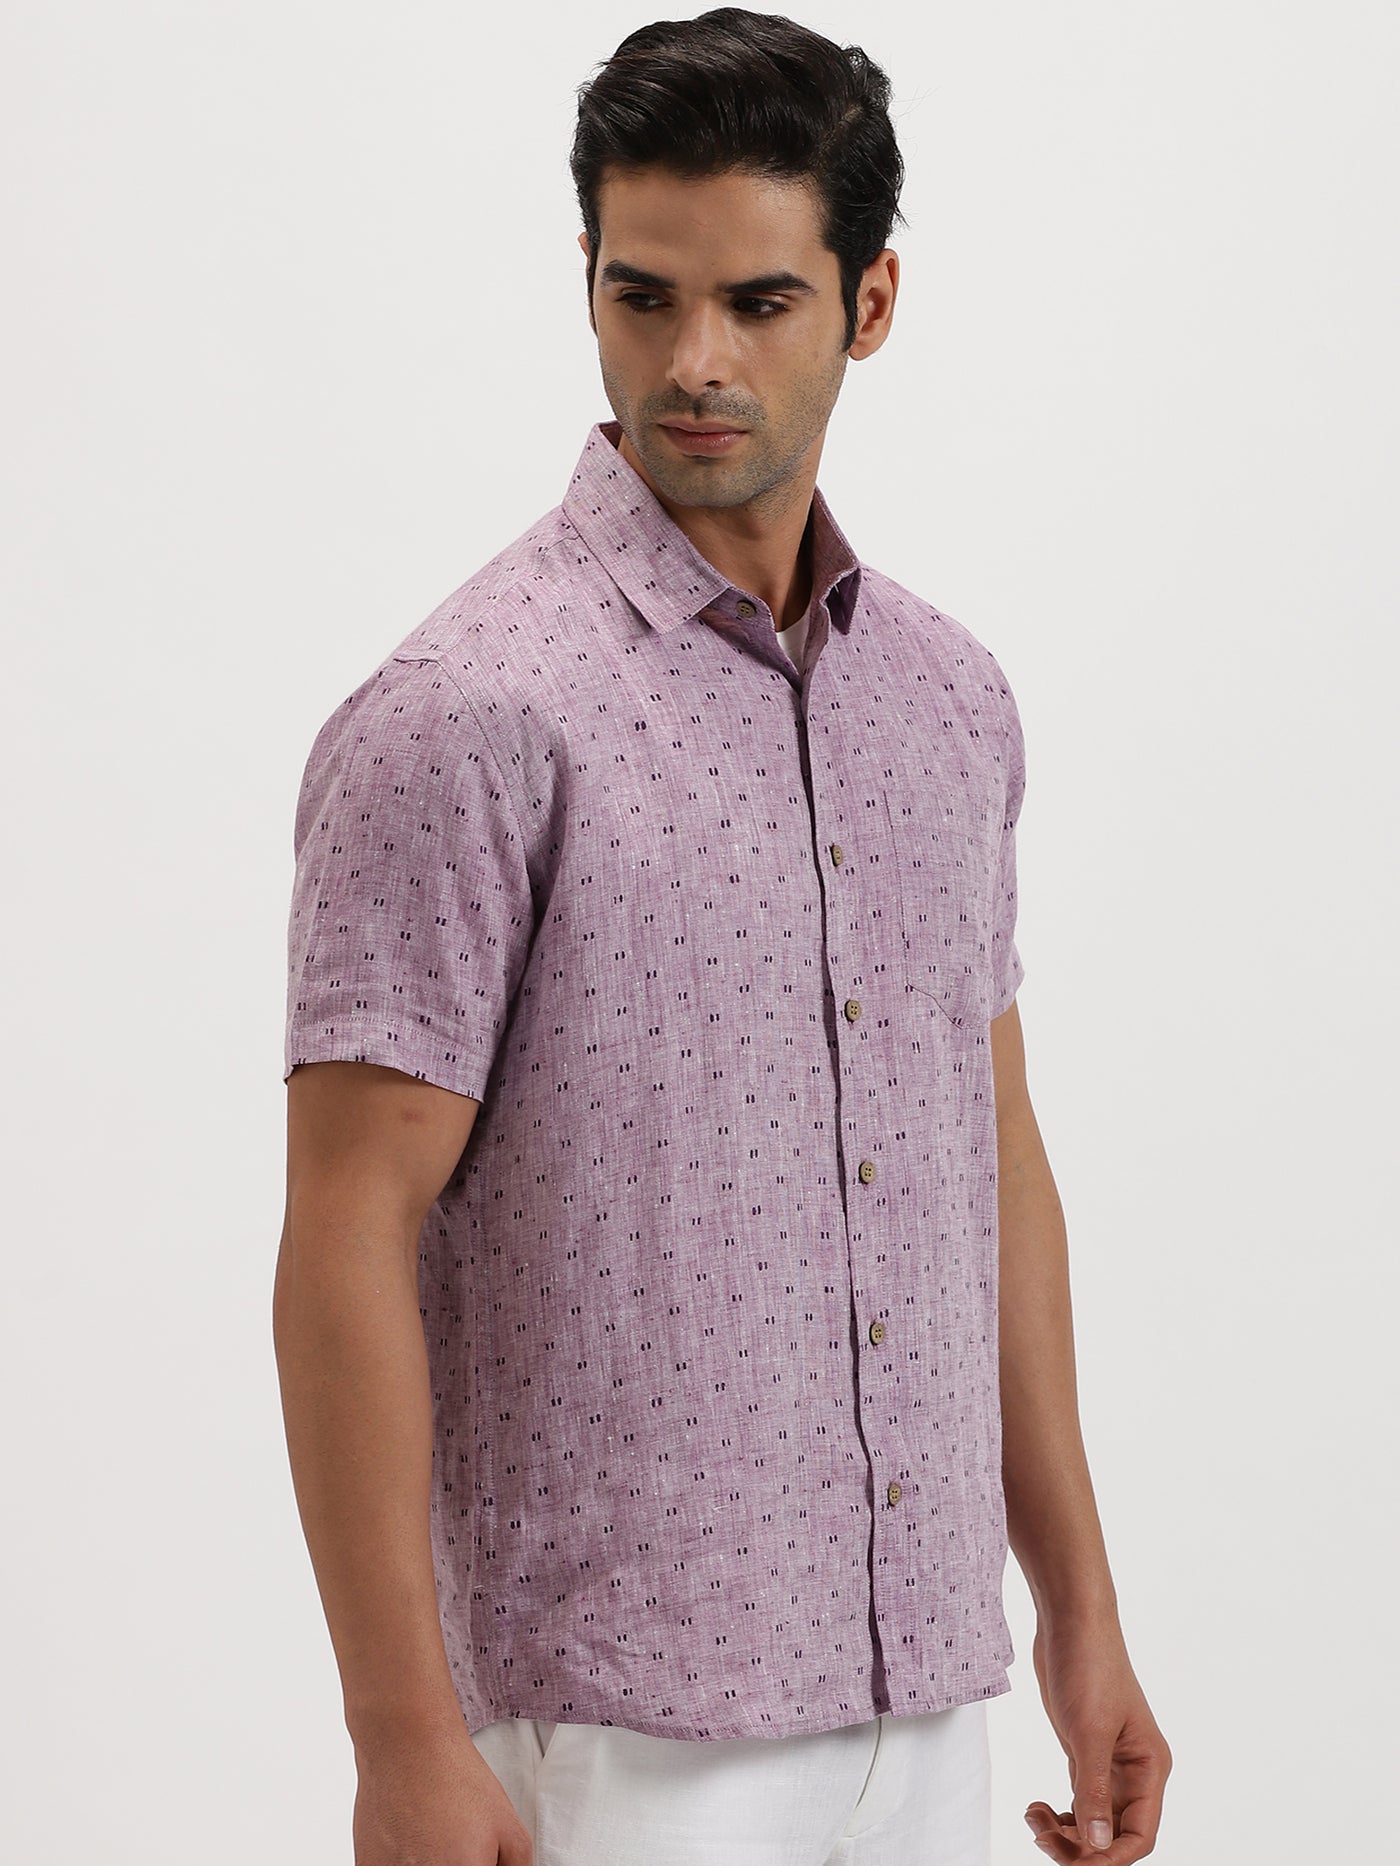 Haynes - Pure Linen Block Printed Dobby Half Sleeve Shirt - Lilac